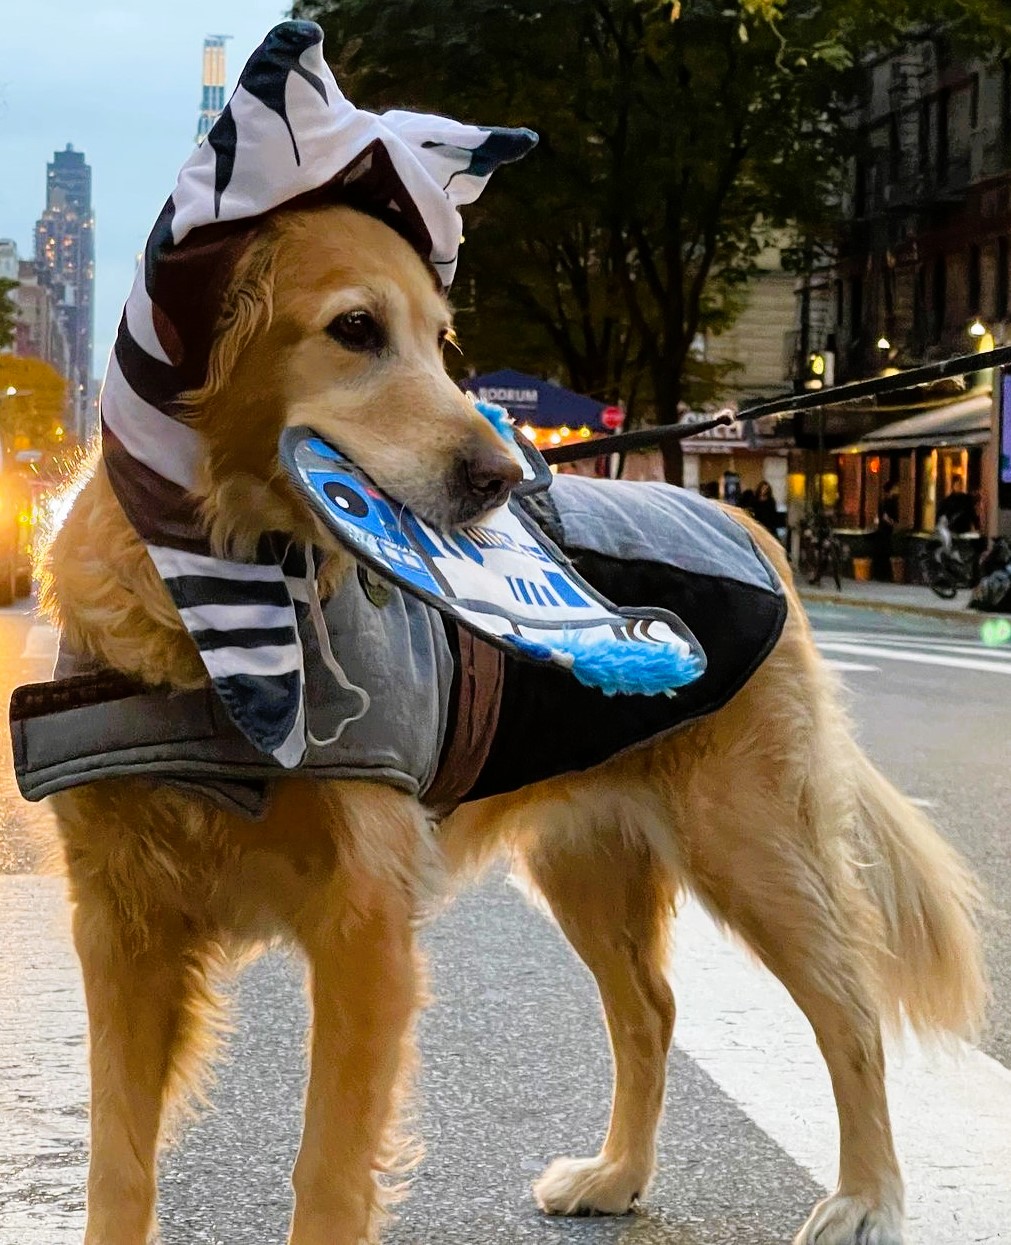 Star Wars dog costume Ahsoka on Golden Retriever